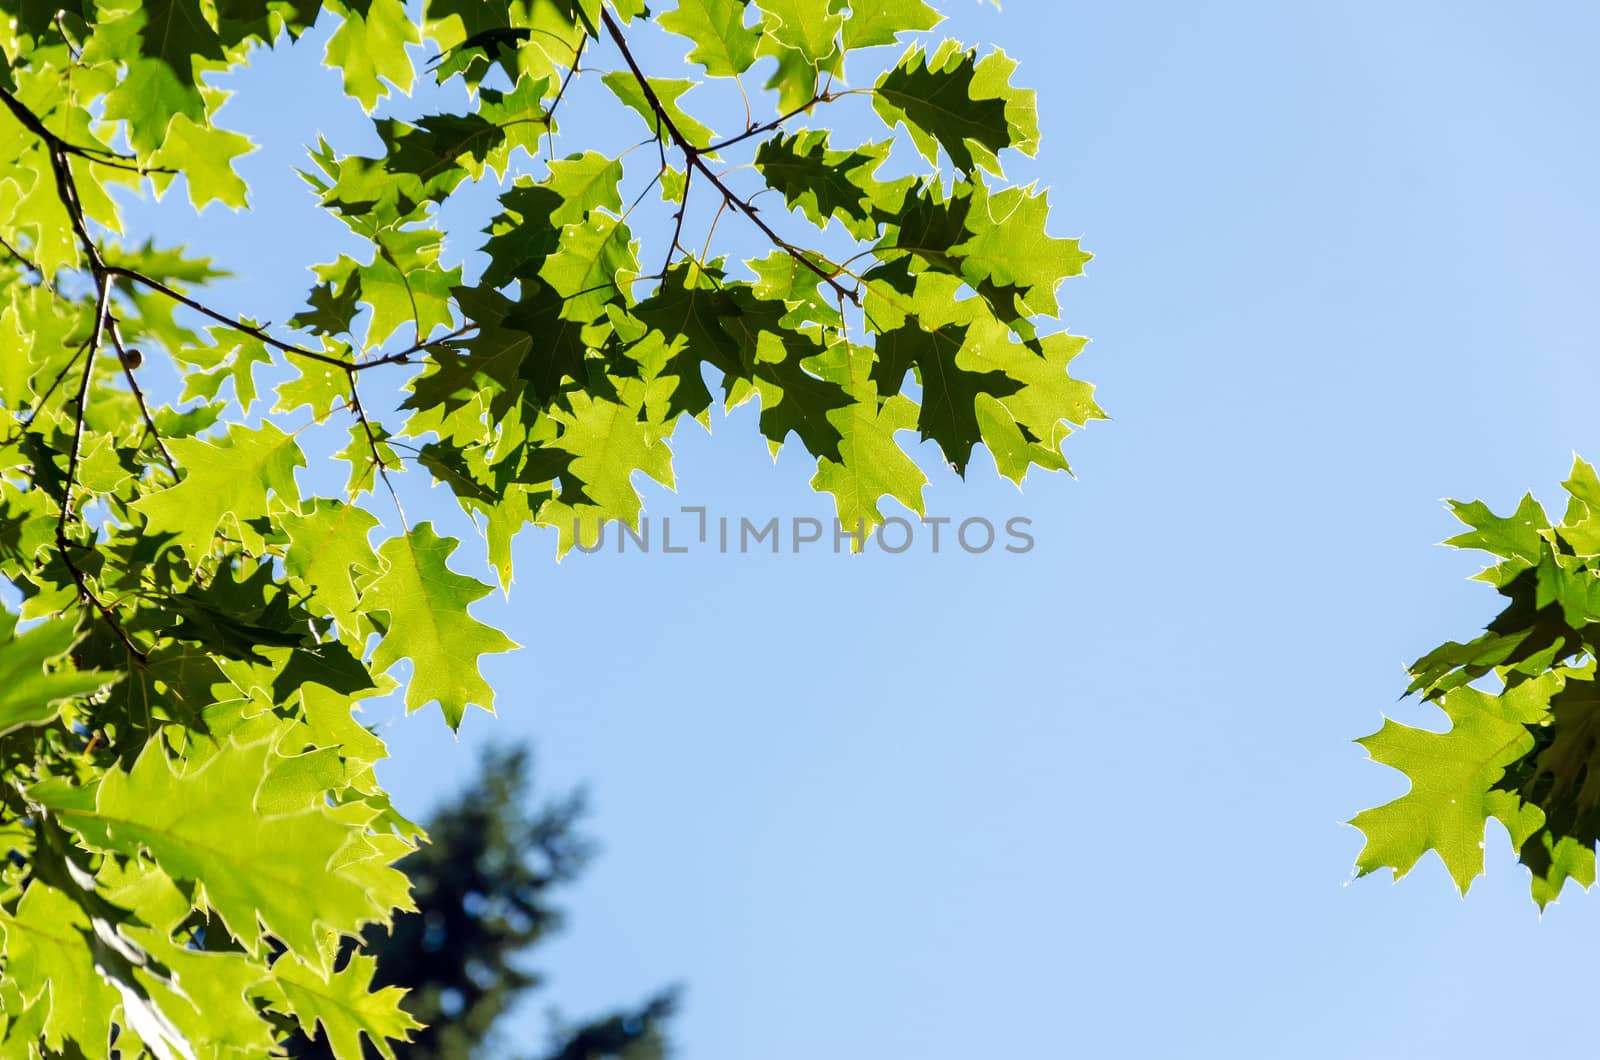 Green sunlit leaves set against a blue sky